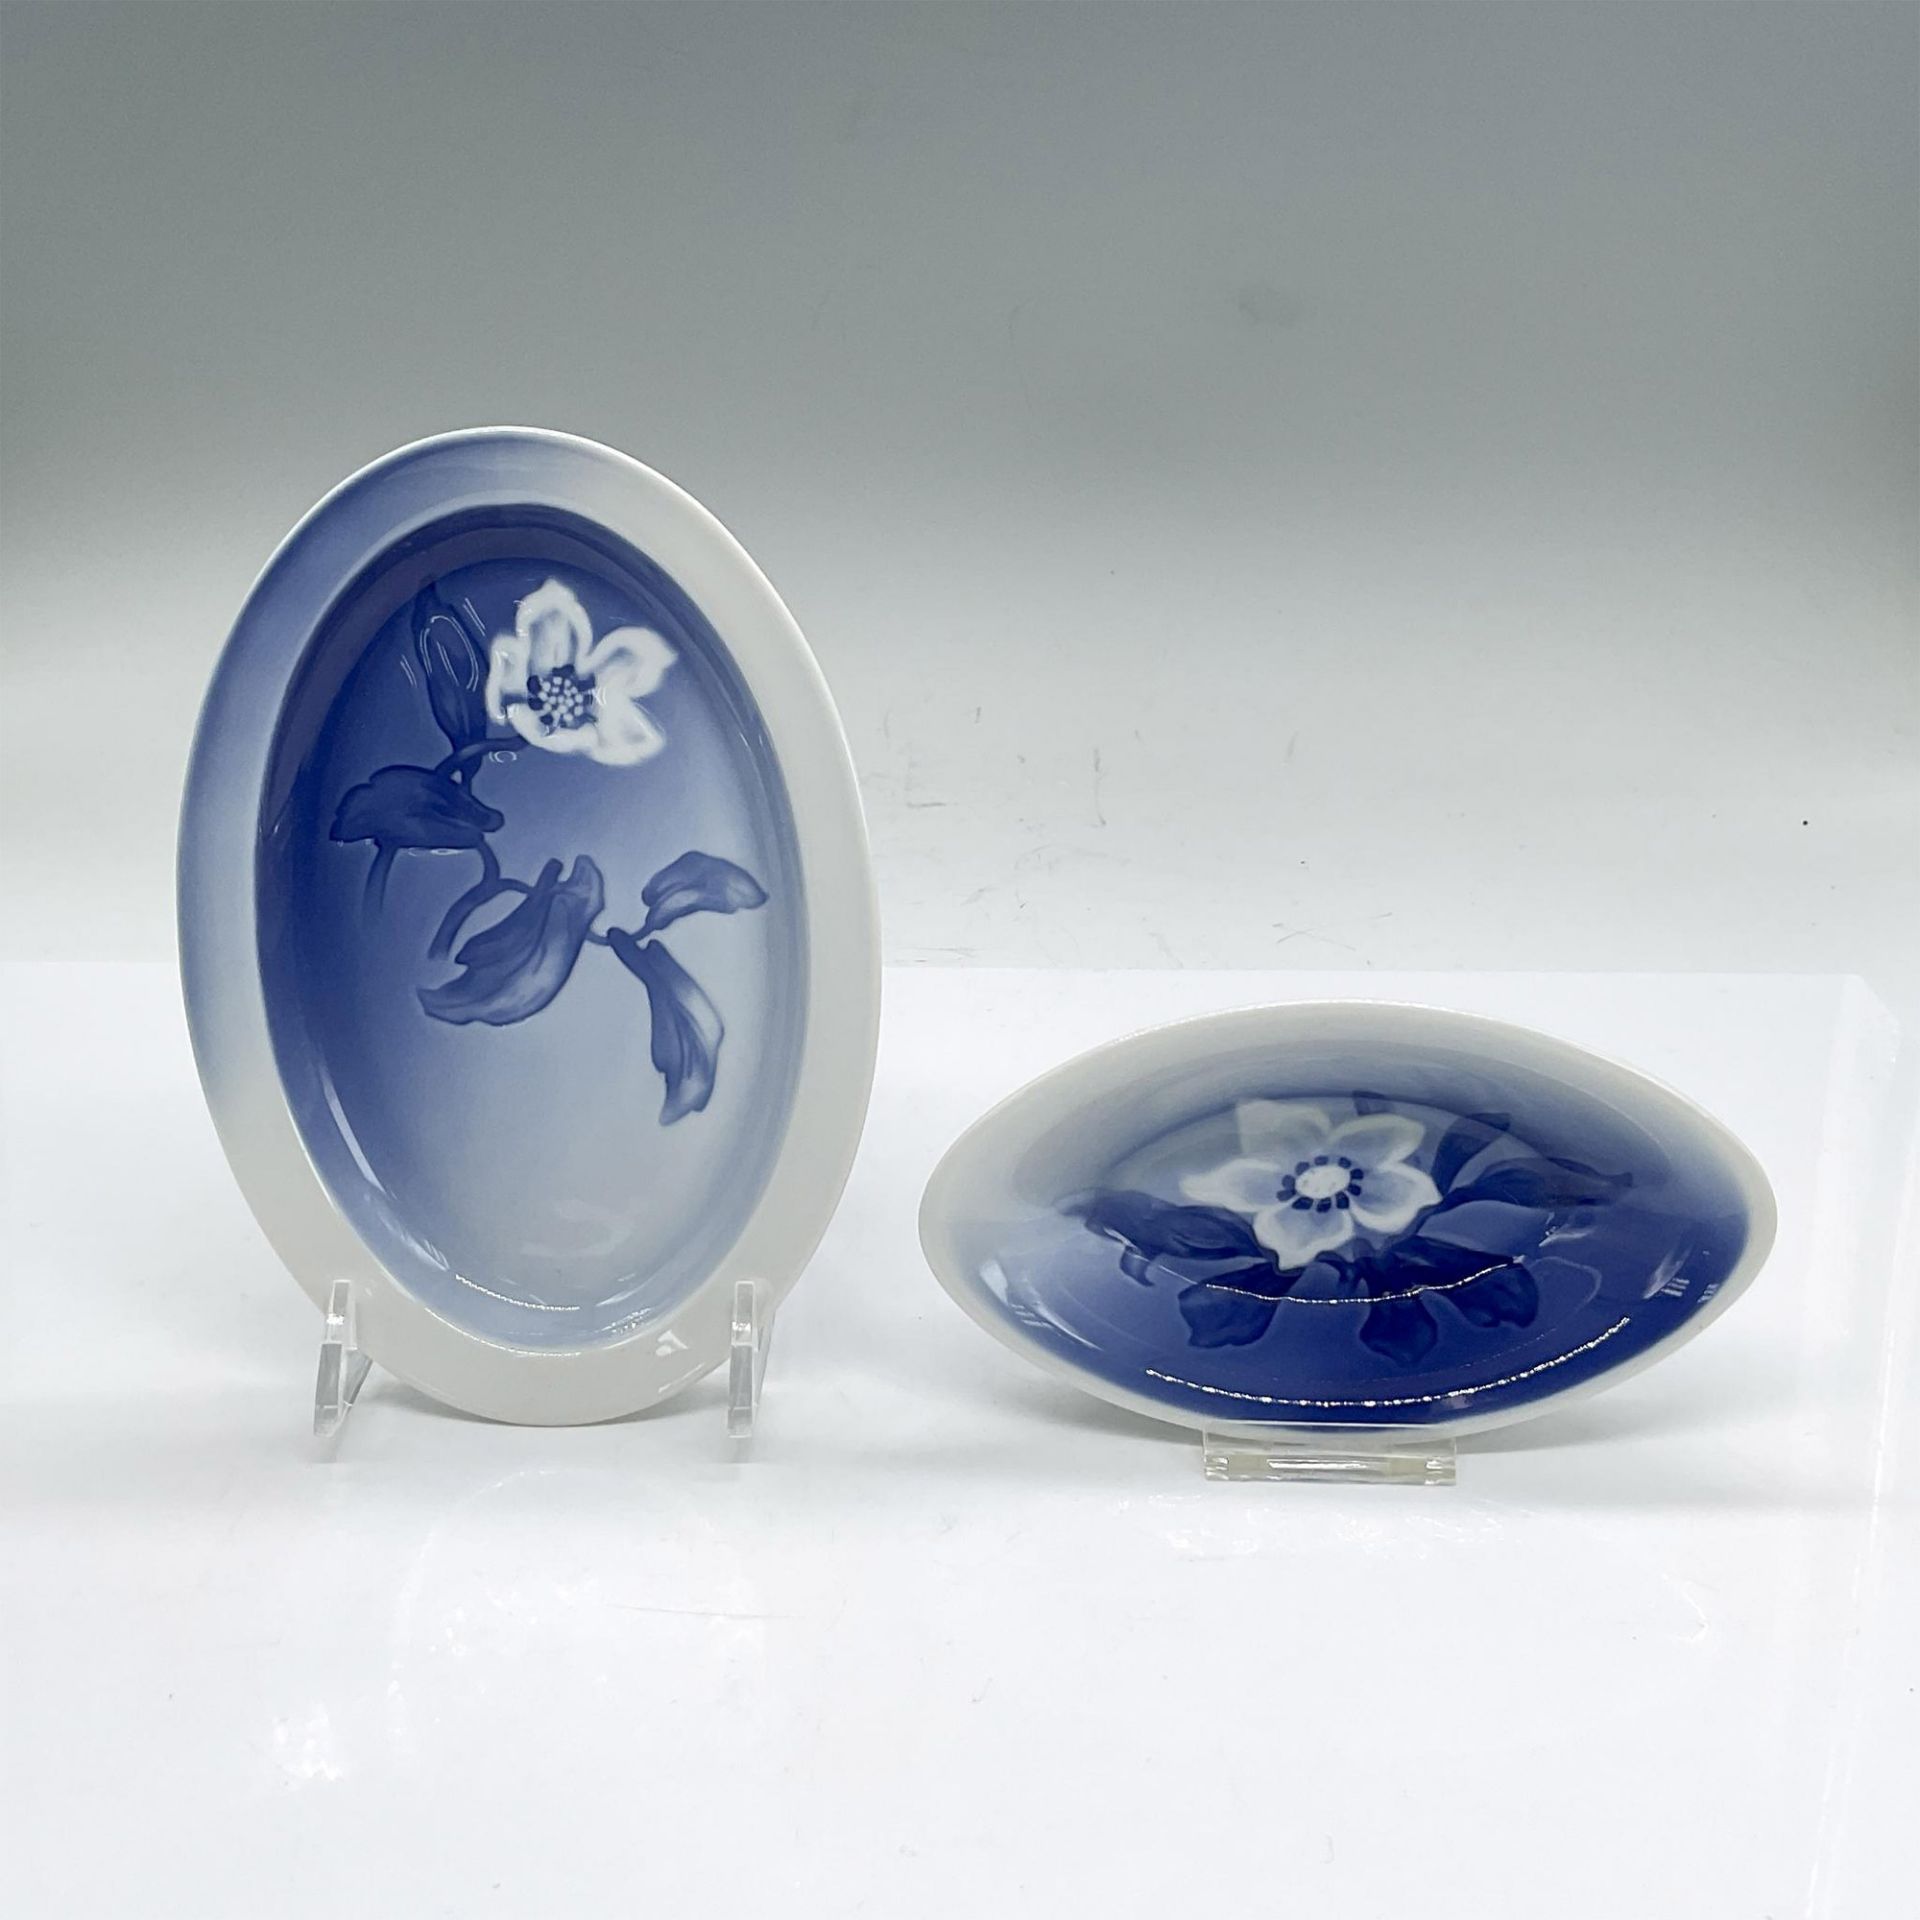 4pc Bing & Grondahl Porcelain Dishes, Christmas Rose - Image 6 of 7